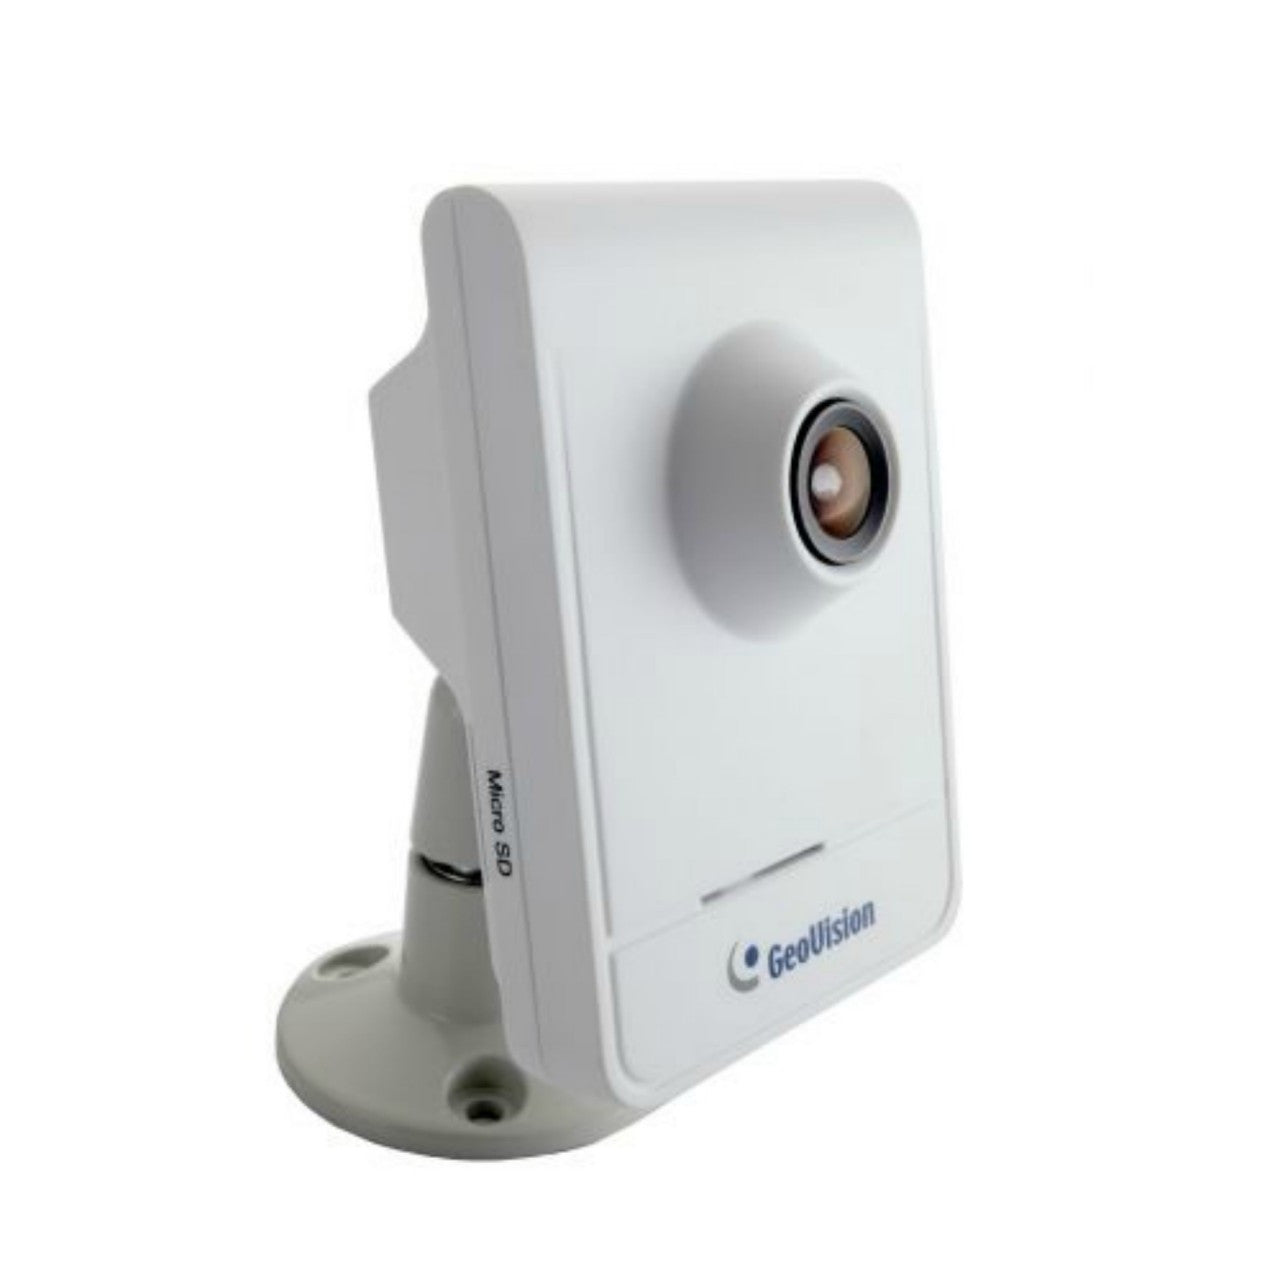 GeoVision GV-CBW220 Cube IP Camera